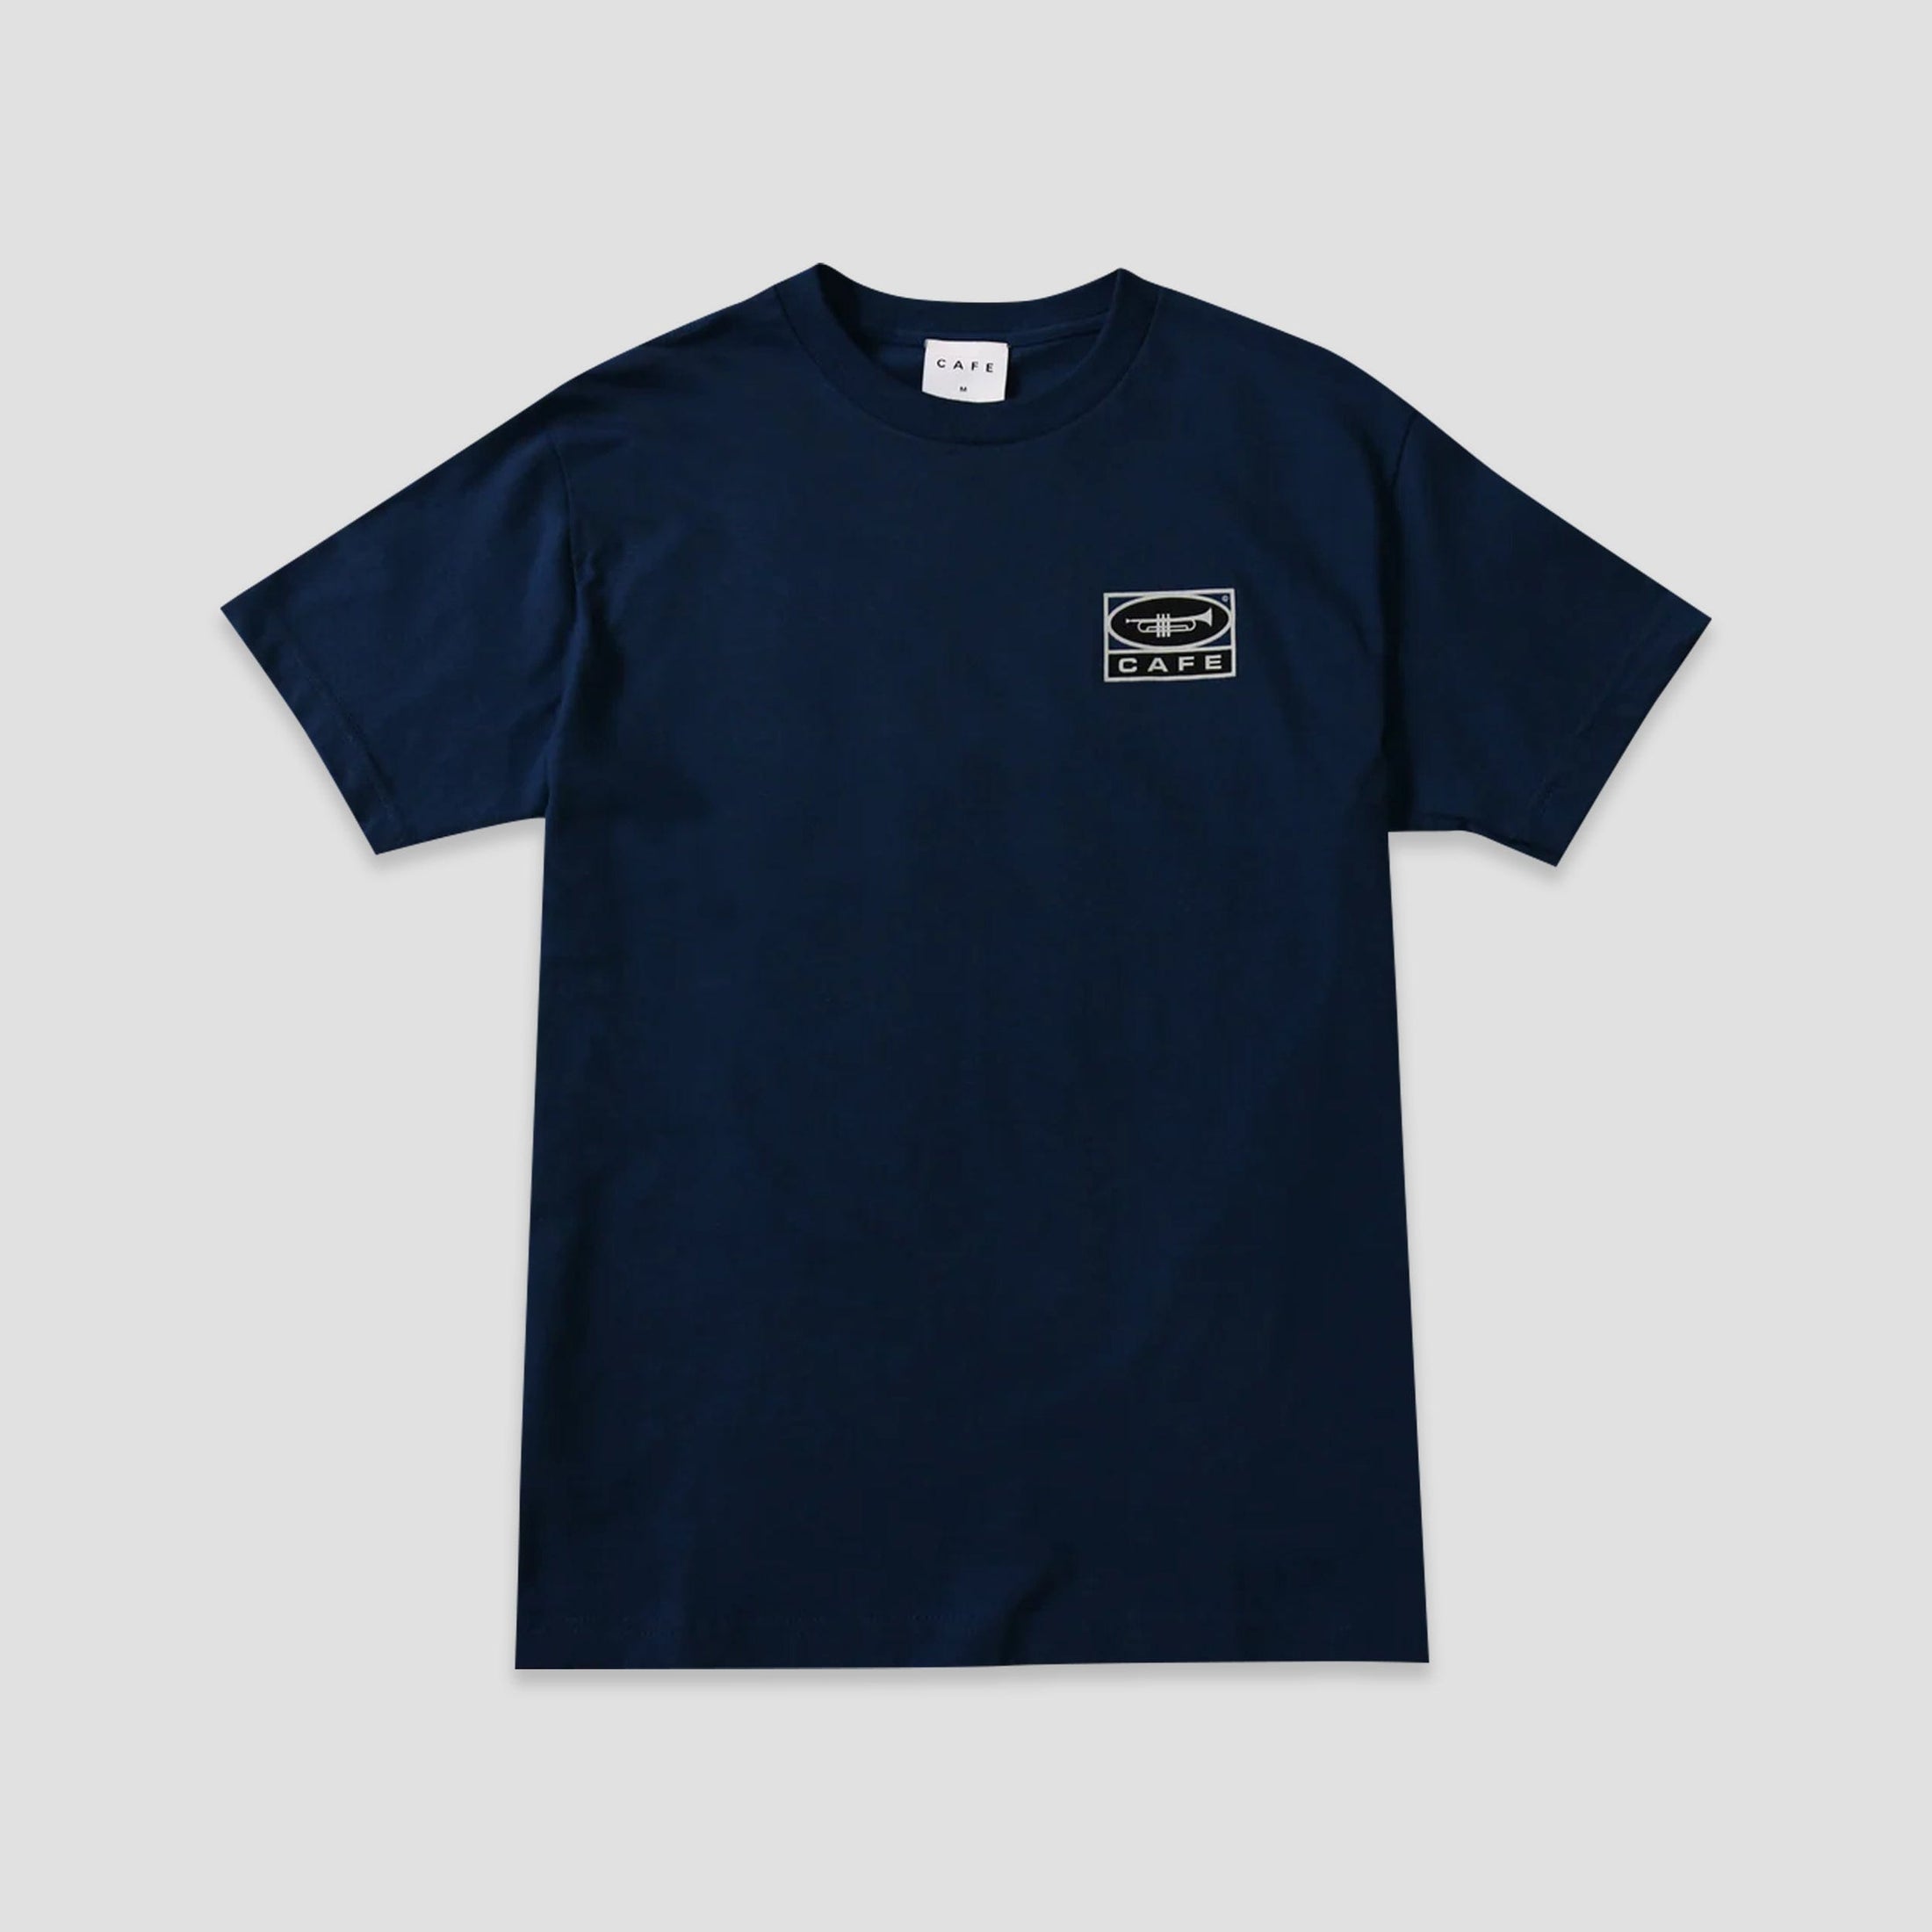 Skateboard Cafe Trumpet Logo T-Shirt Navy